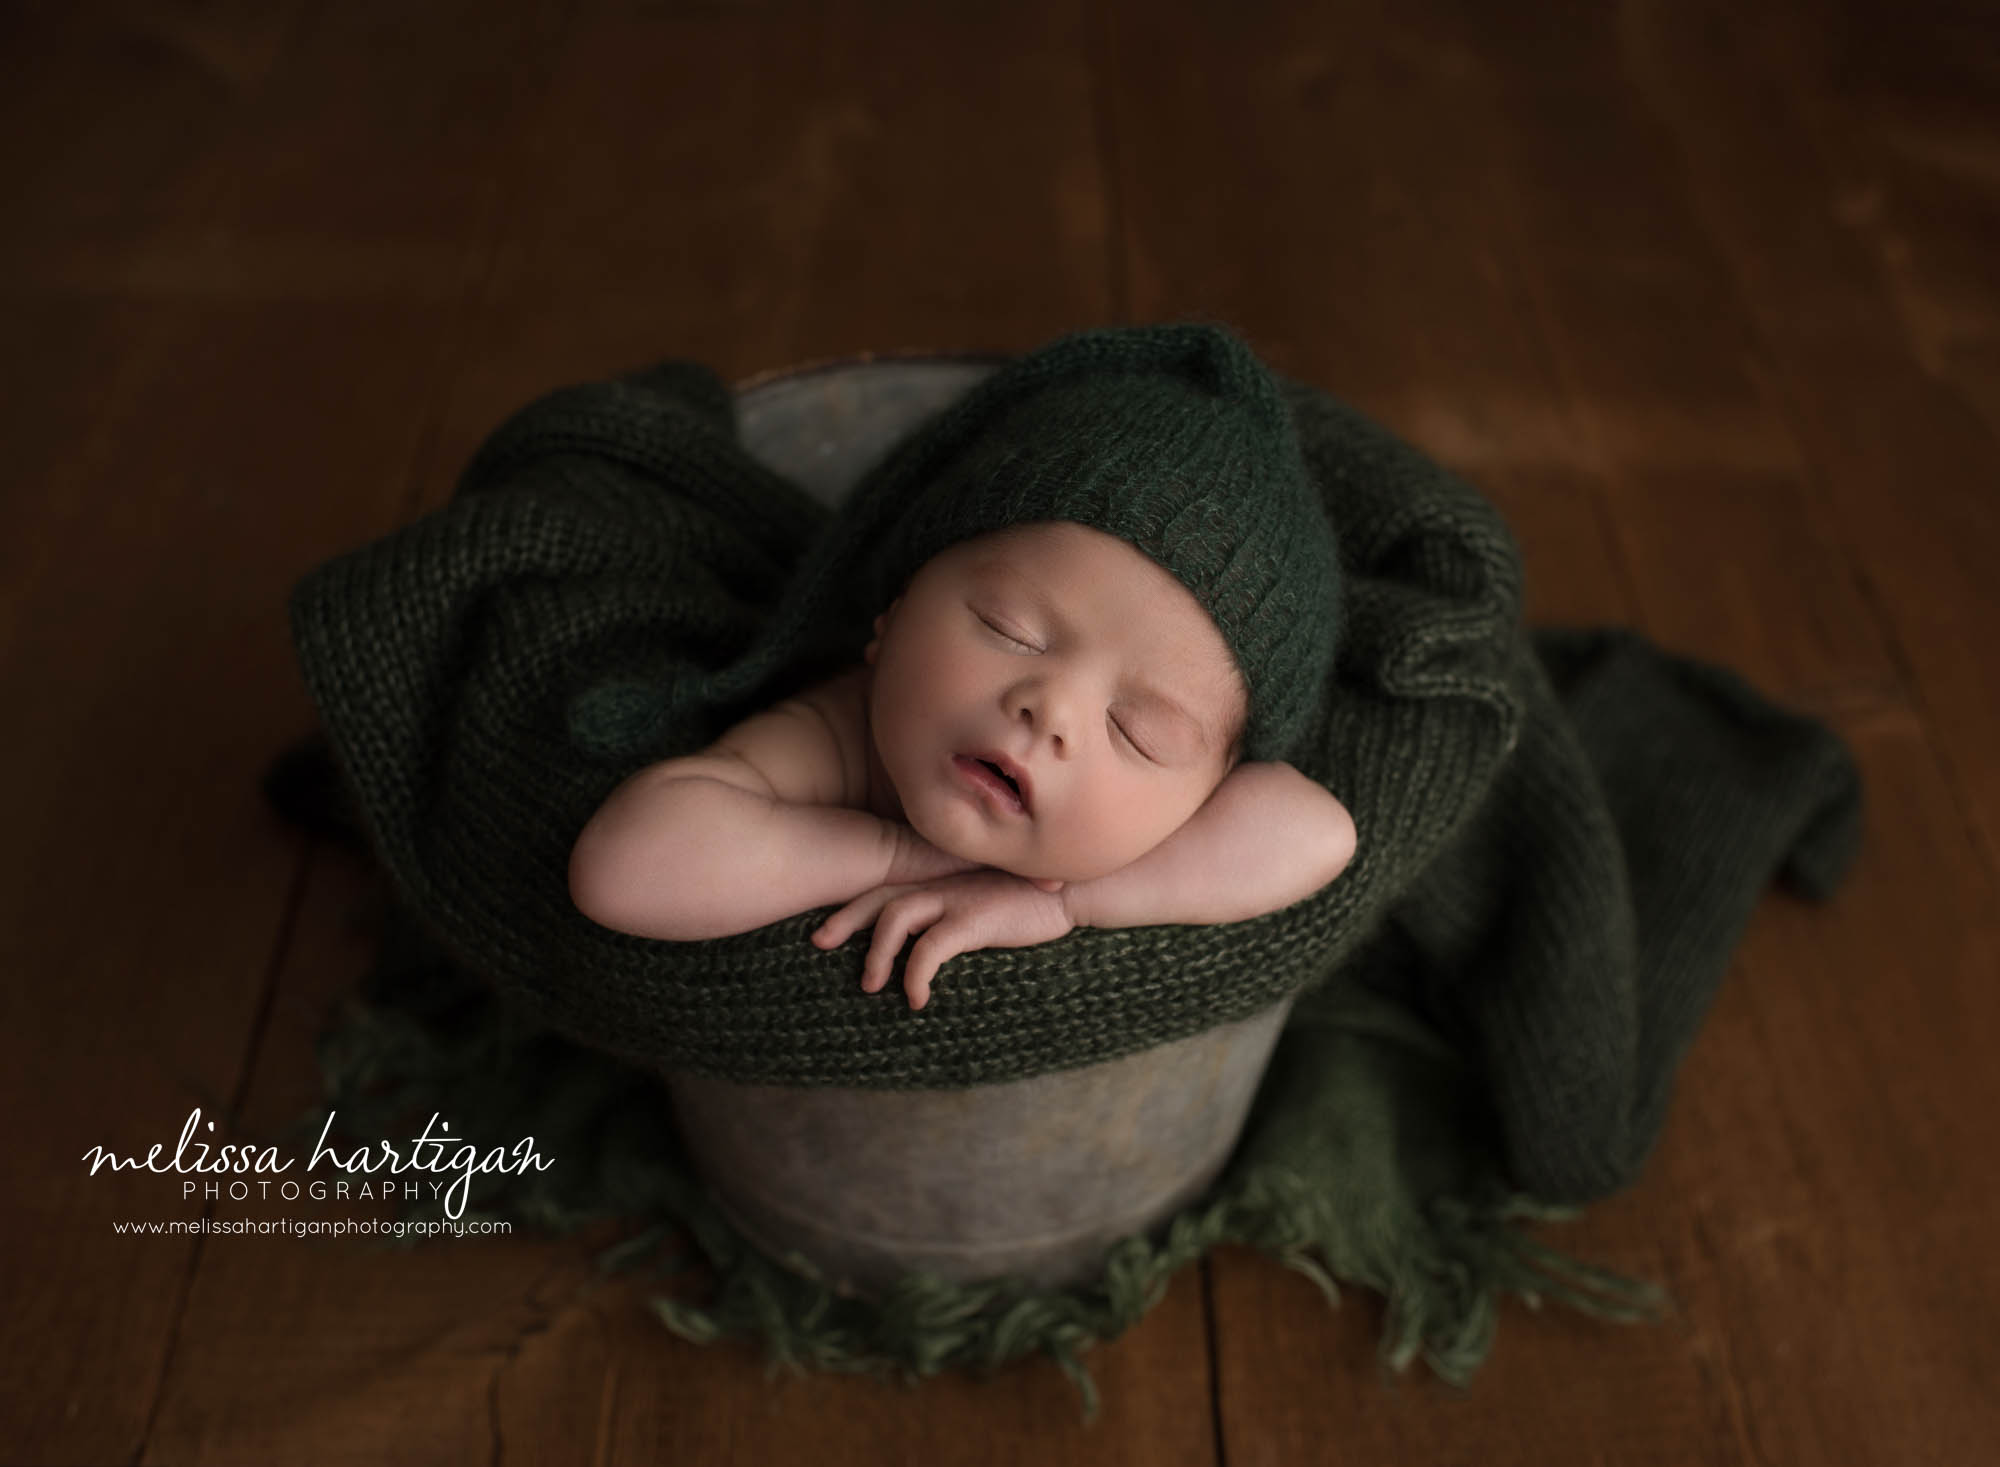 newborn baby boy posed in bucket wearing dark green knitted sleepy cap